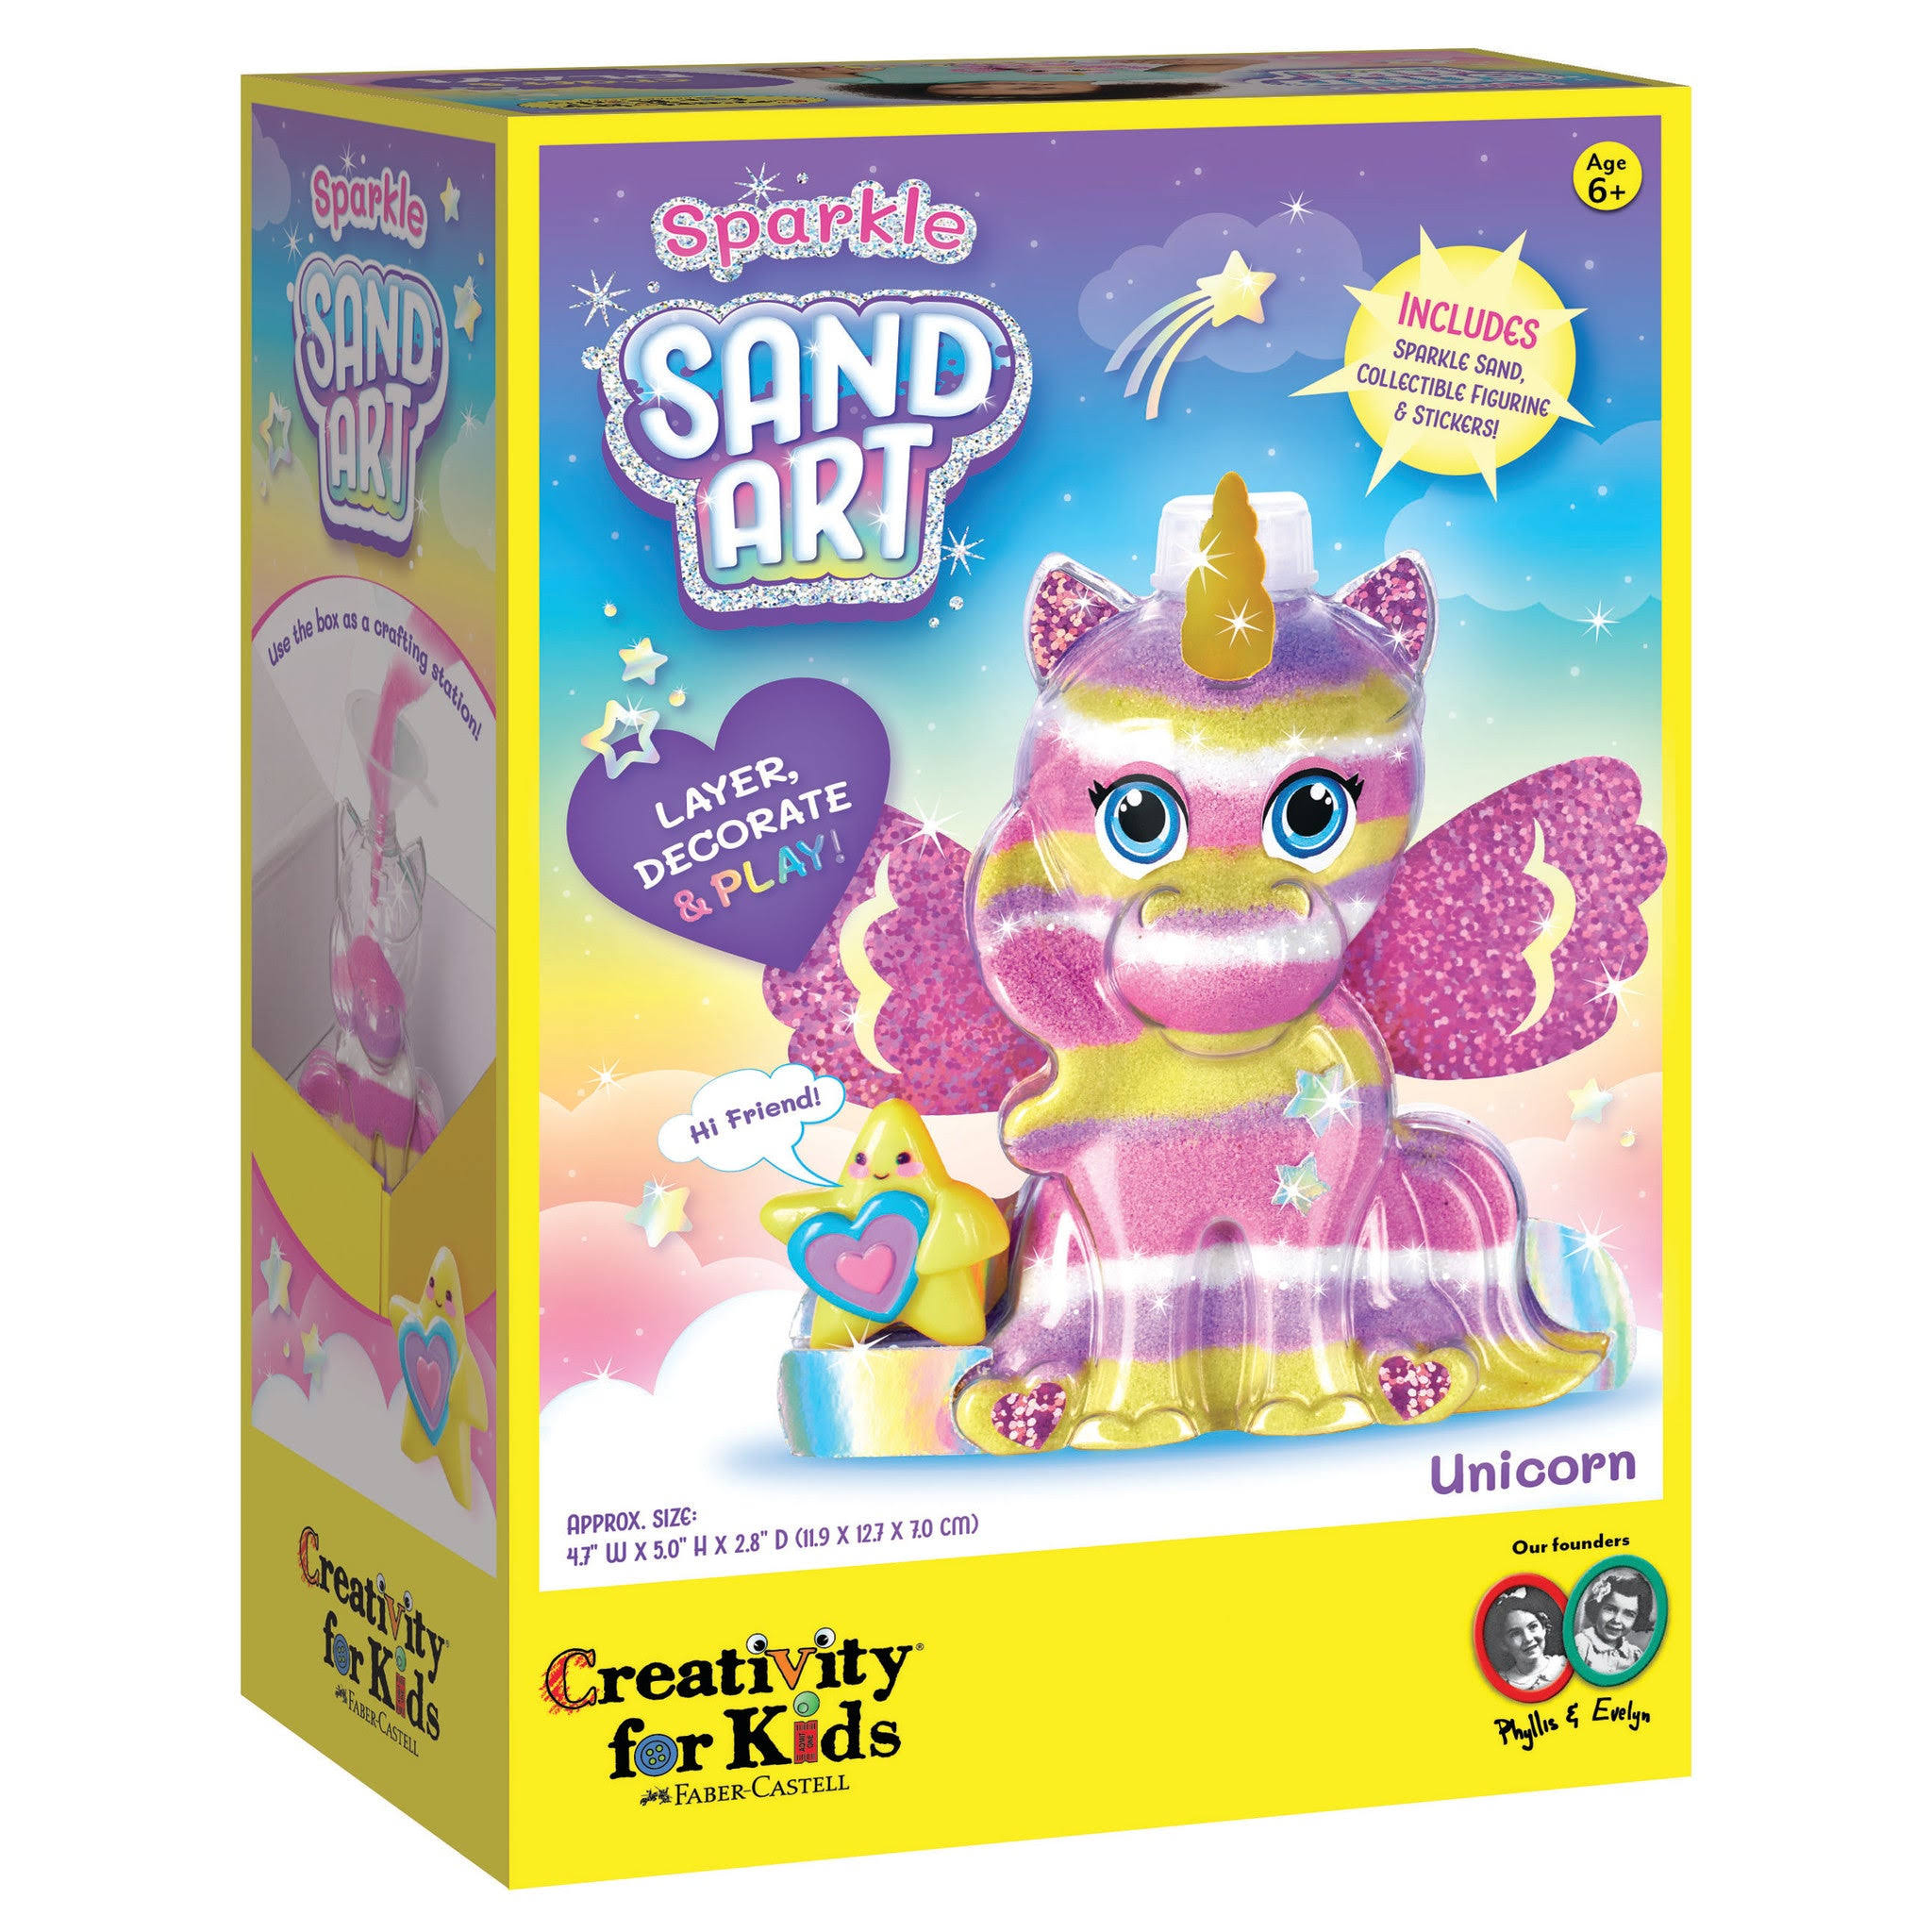 Sparkle Sand Art - Unicorn